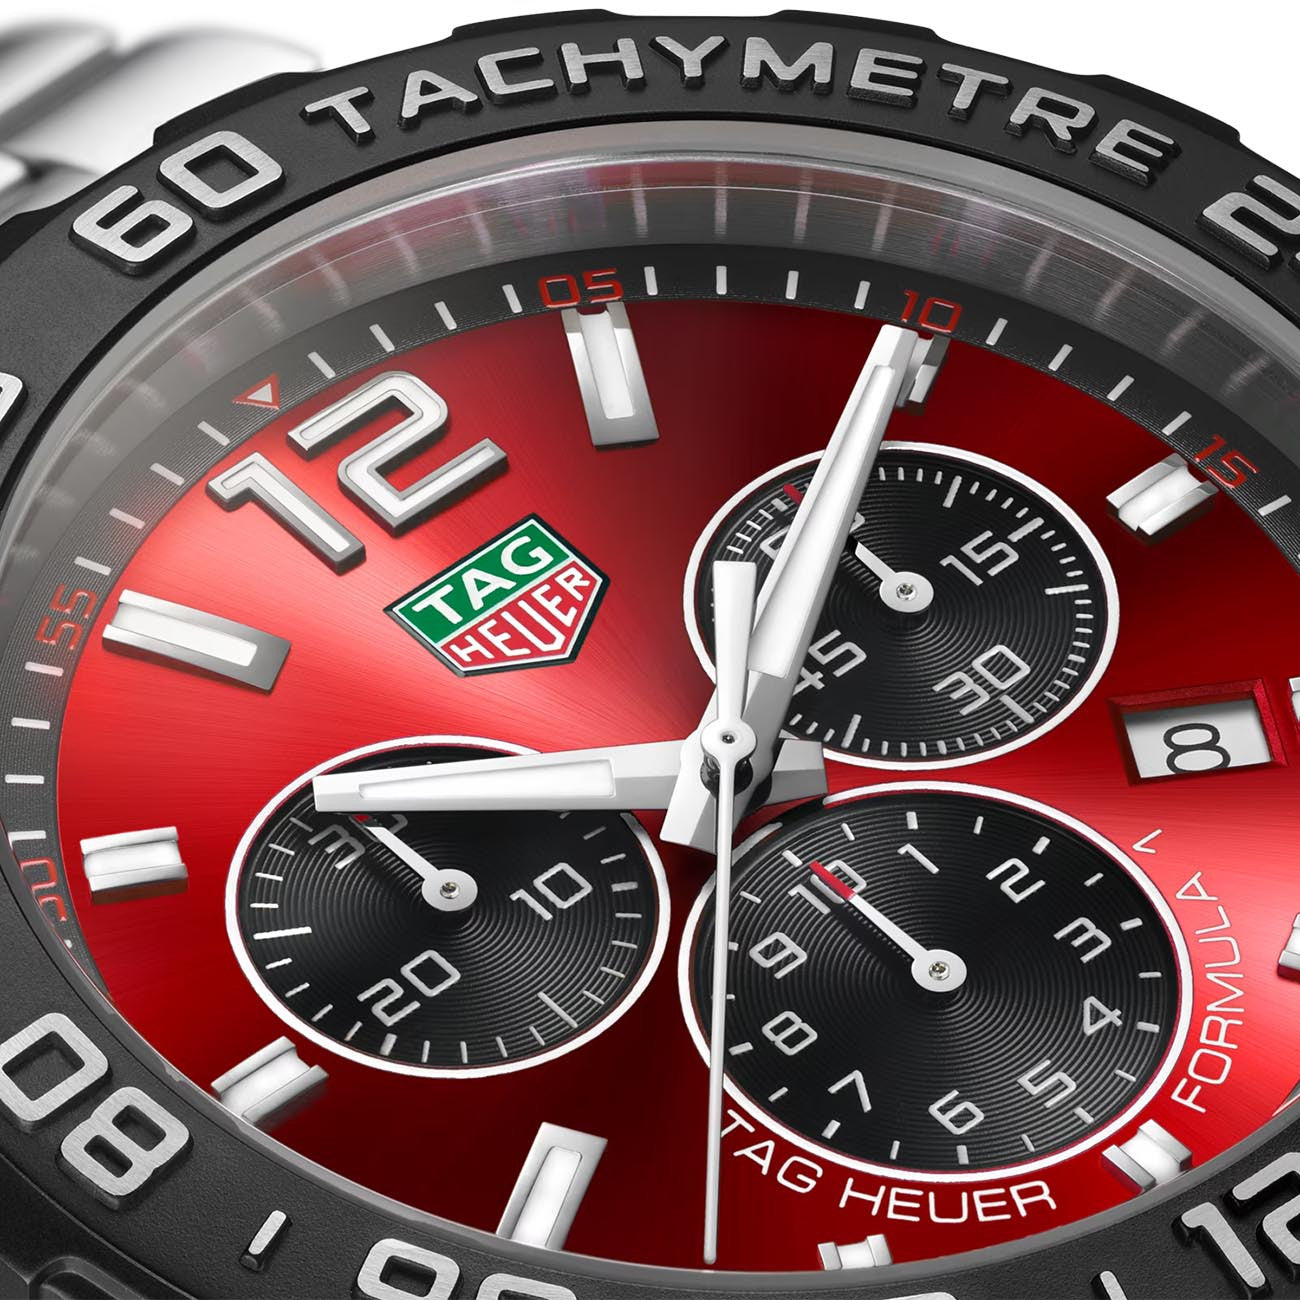 Tag Heuer Steel 43mm Quartz Formula 1 Watch